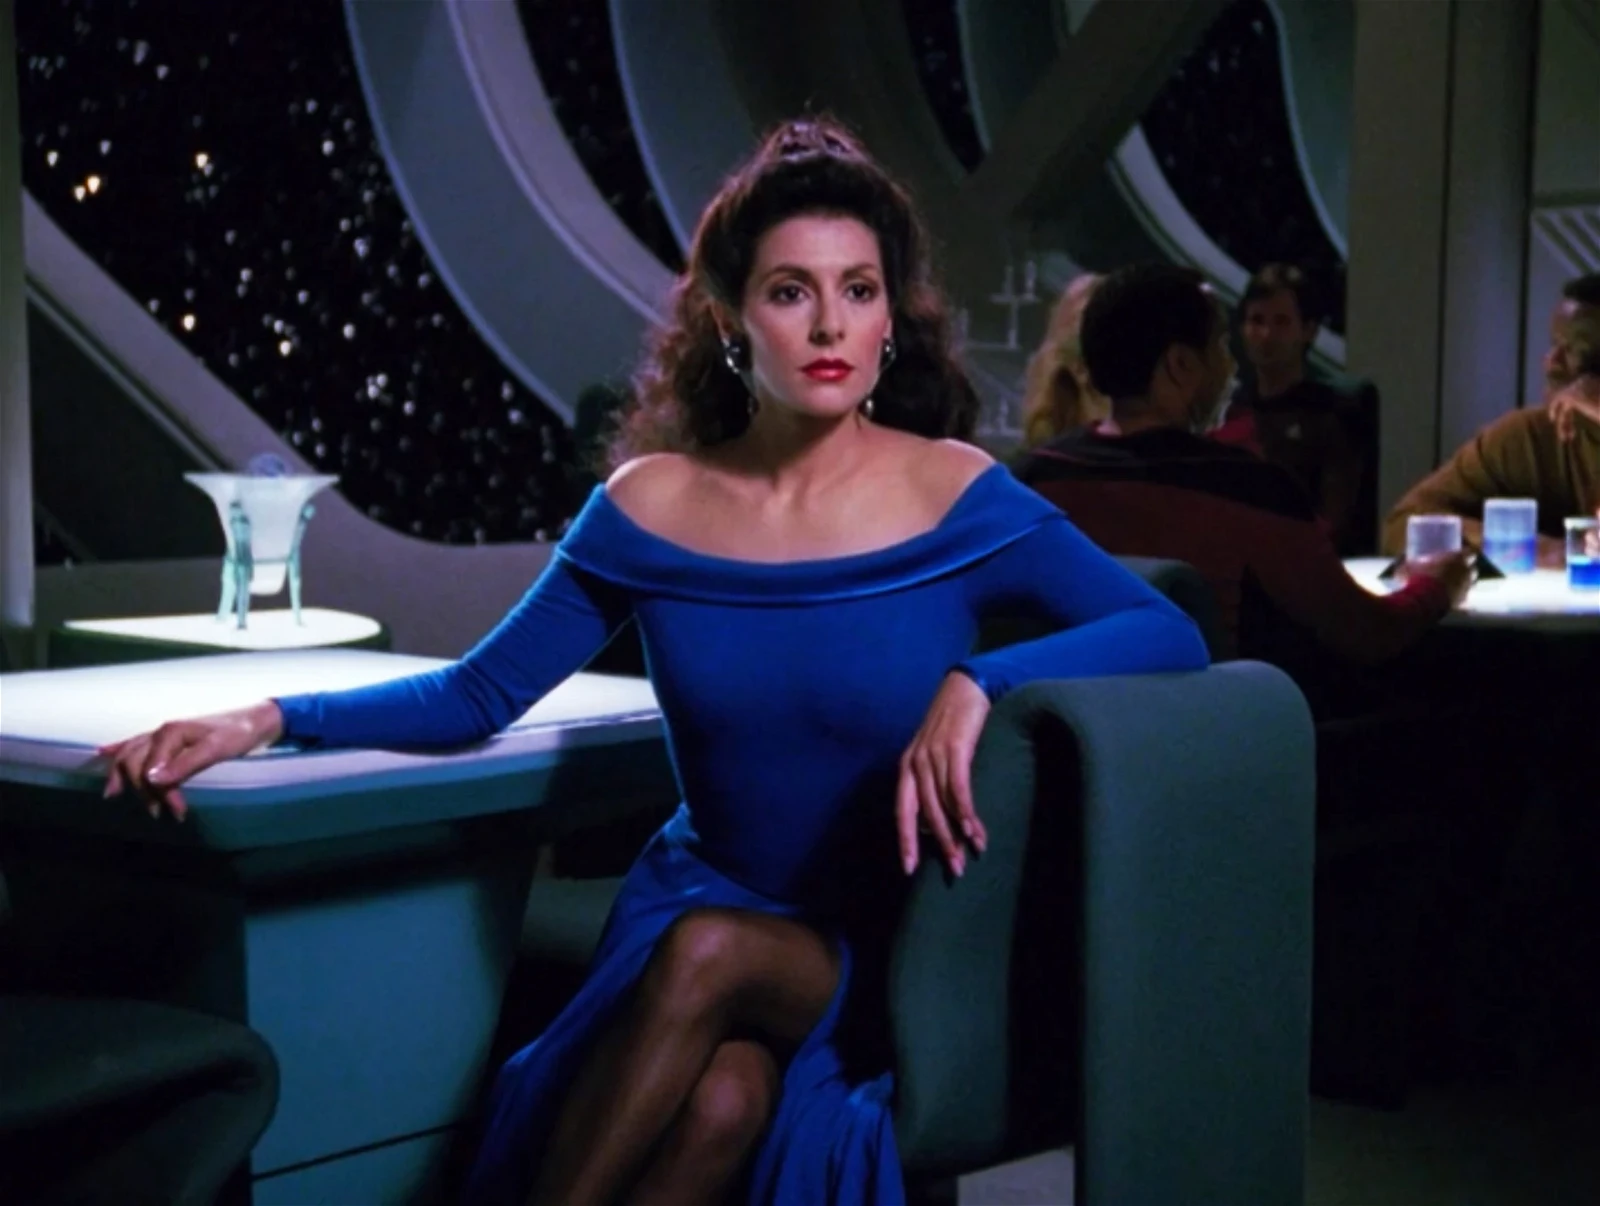 Marina Sirtis as Deanna Troi in Star Trek: The Next Generation